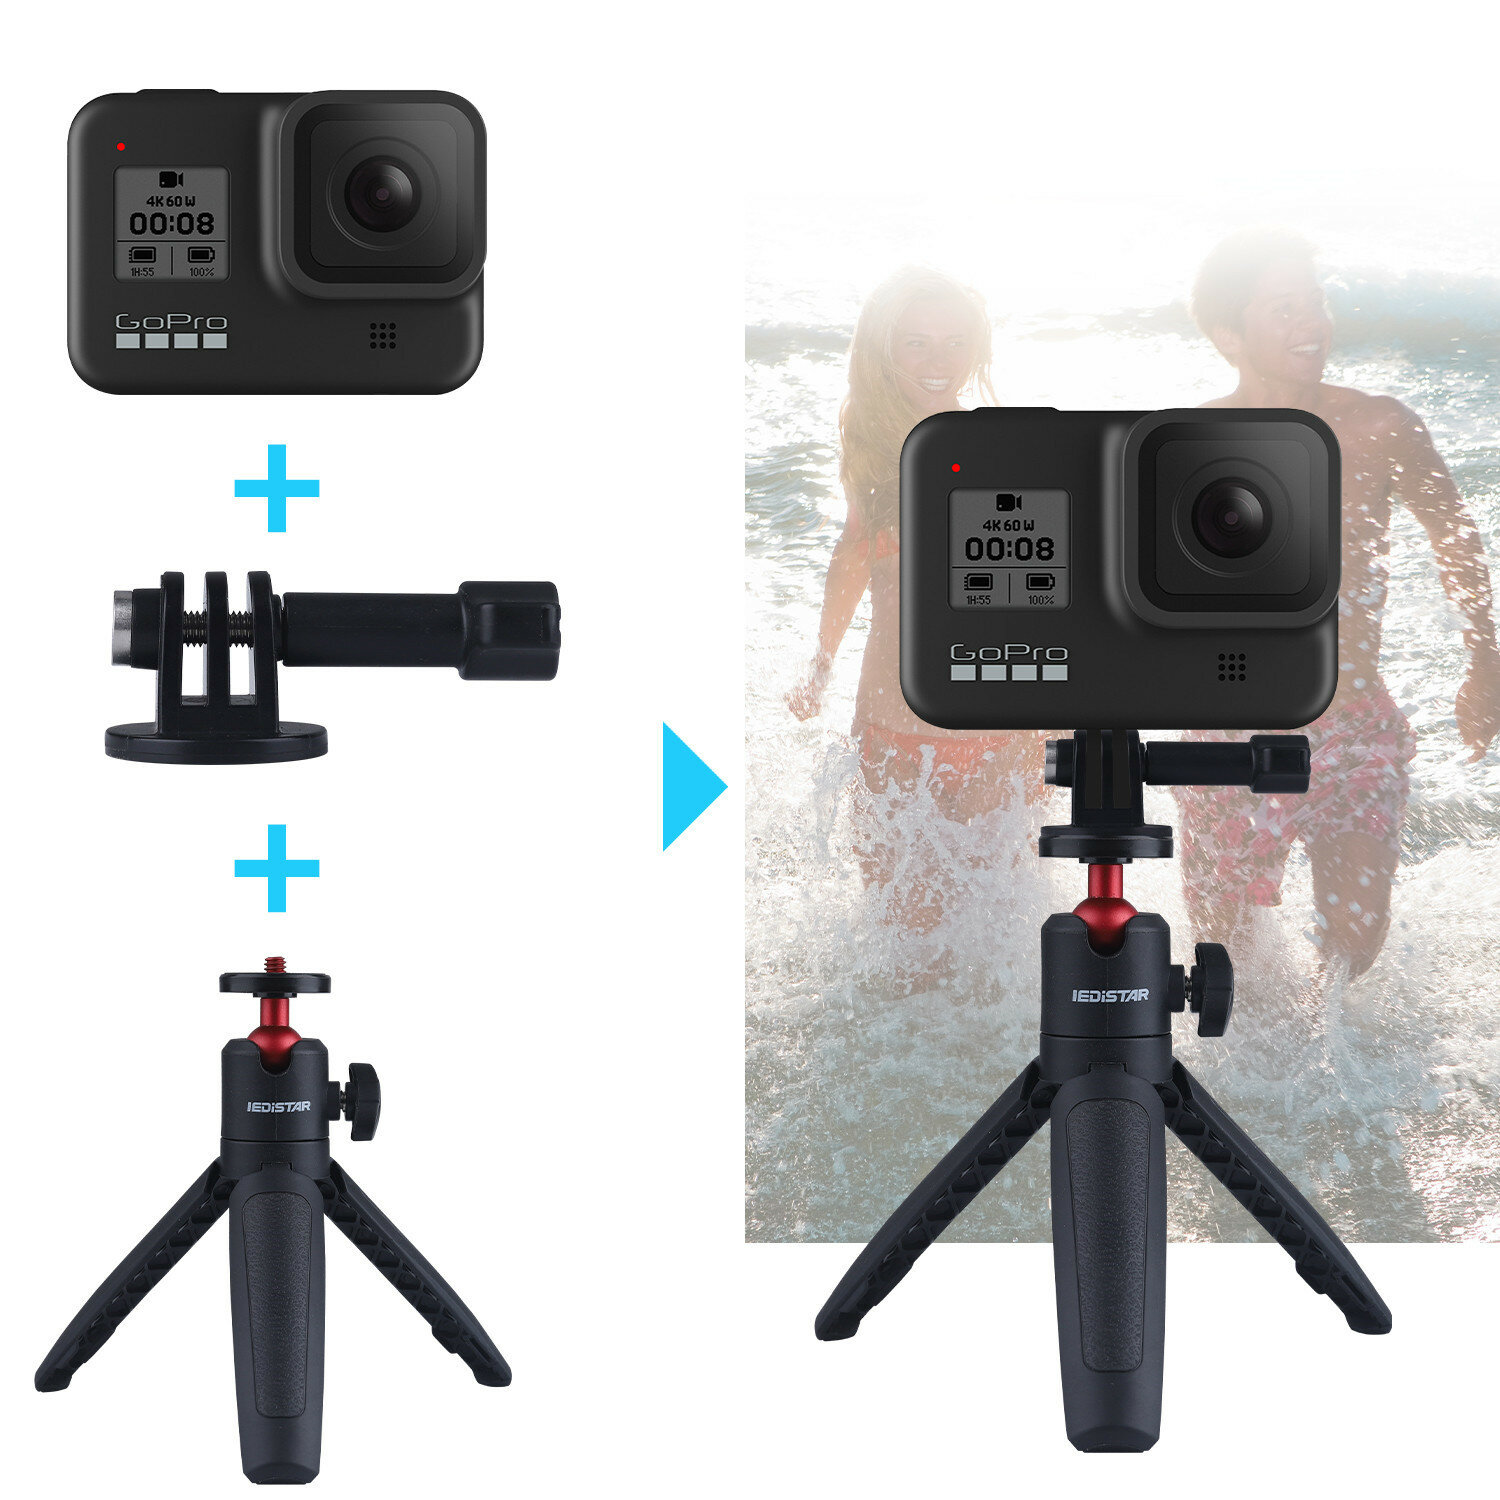 

LEDISTAR DX-06 Portable Hanheld Selfie Telescopic Stick Tripod Bracket for GoPro Cameras